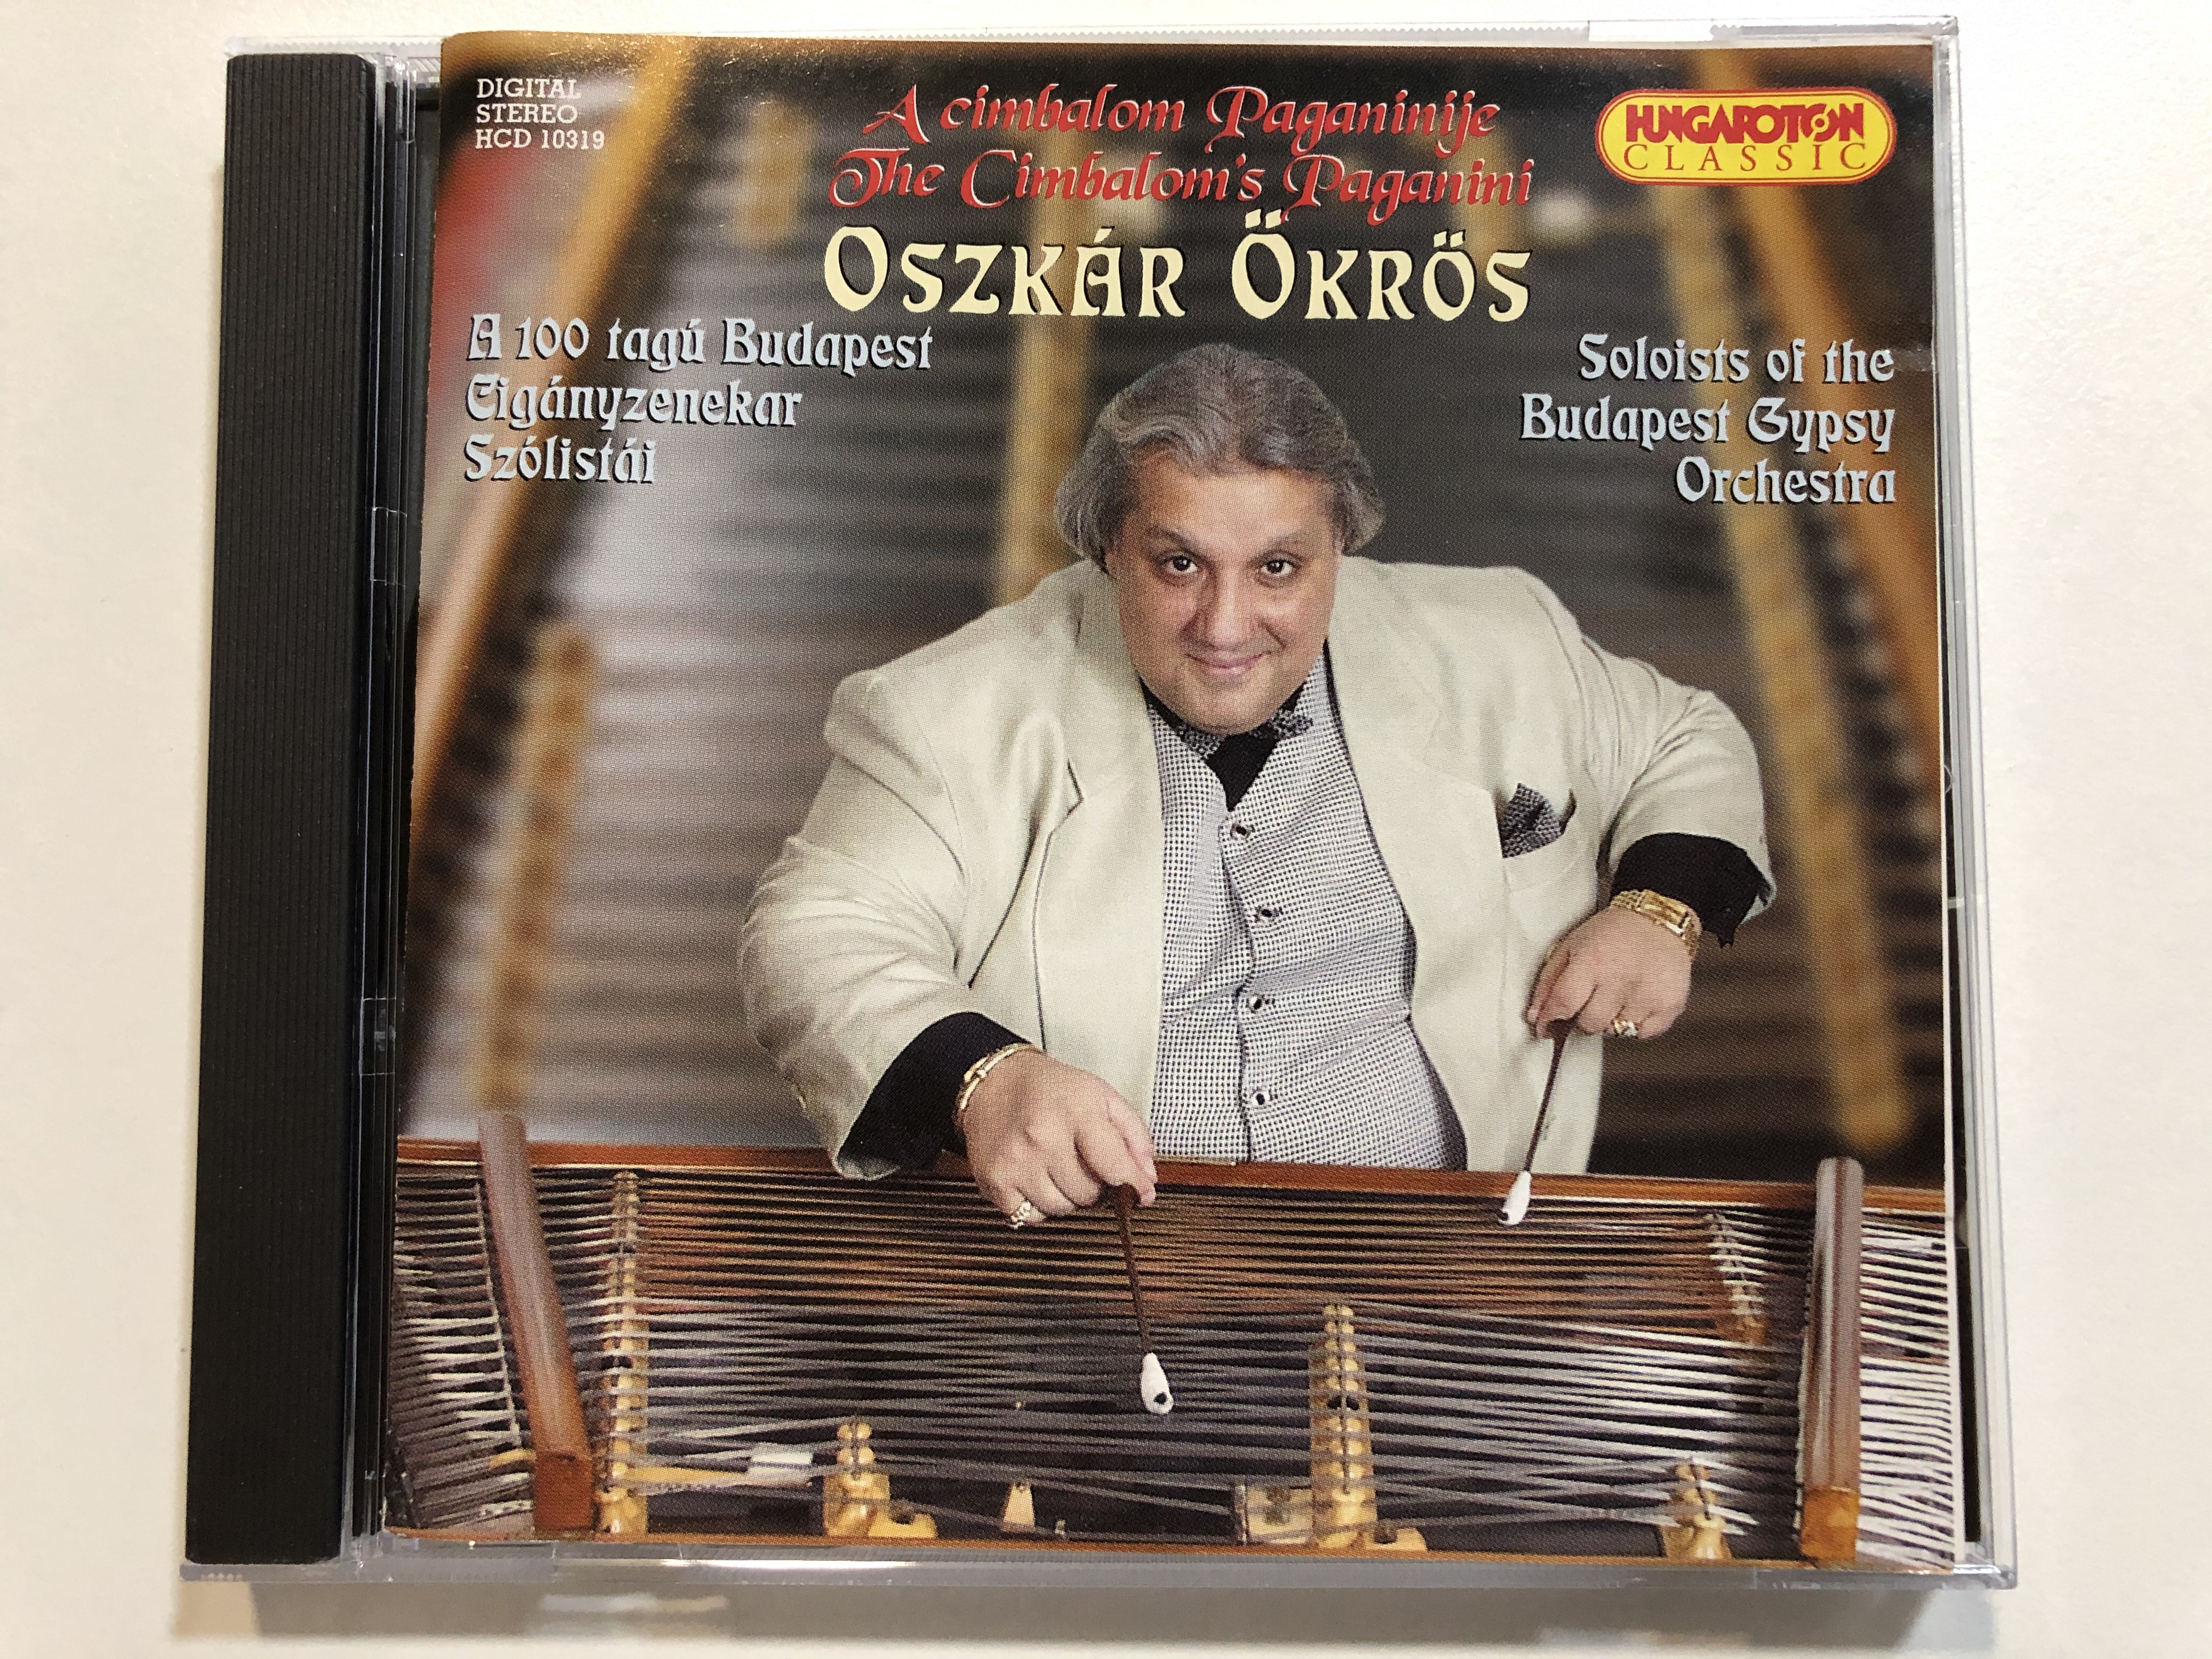 a-cimbalom-paganinije-the-cimbalom-s-paganini-oszk-r-kr-s-a-100-tag-budapest-cig-nyzenekar-sz-list-i-soloists-of-the-budapest-gypsy-orchestra-hungaroton-classic-audio-cd-2002-stereo-1-.jpg